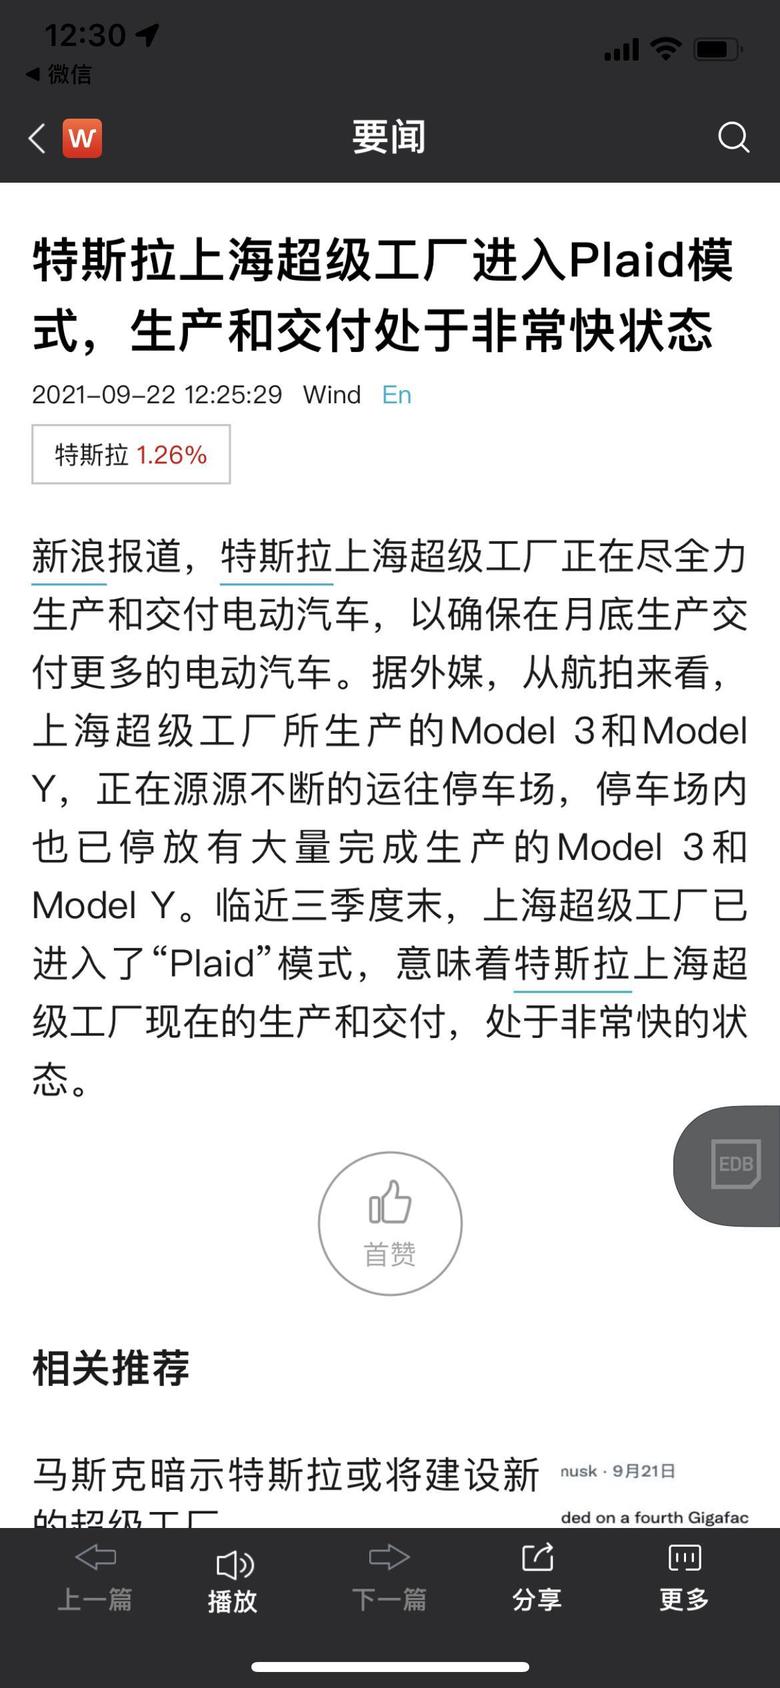 model y 如题，9月上海工厂已经在加速生产了，好事！